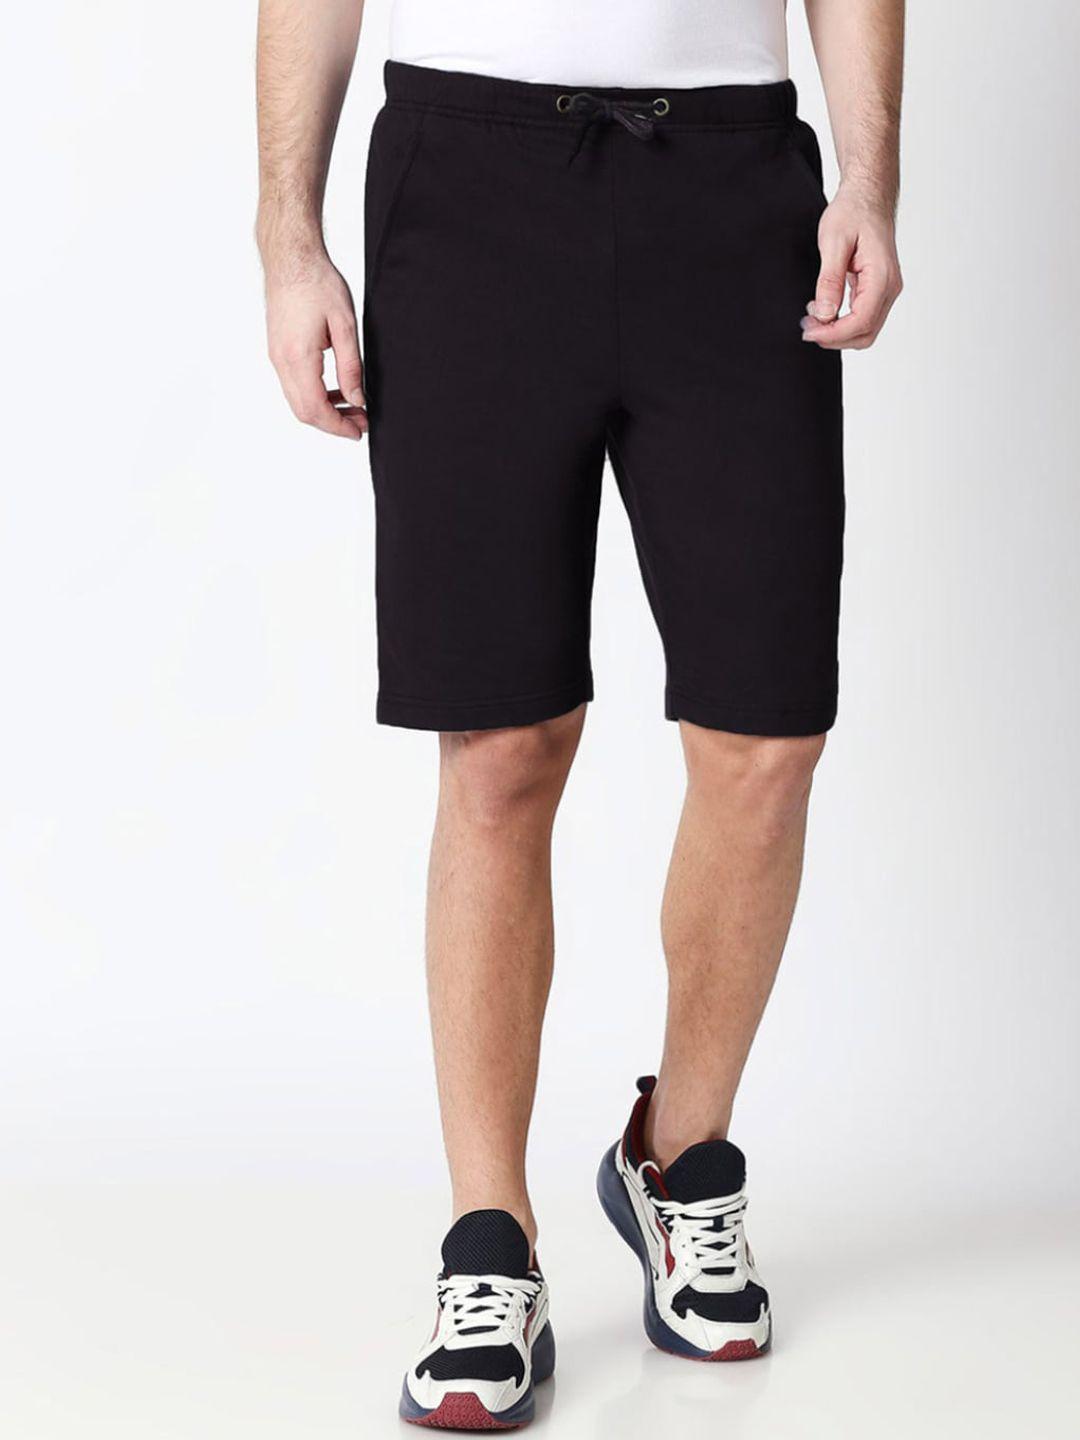 bewakoof men black mid-rise regular shorts